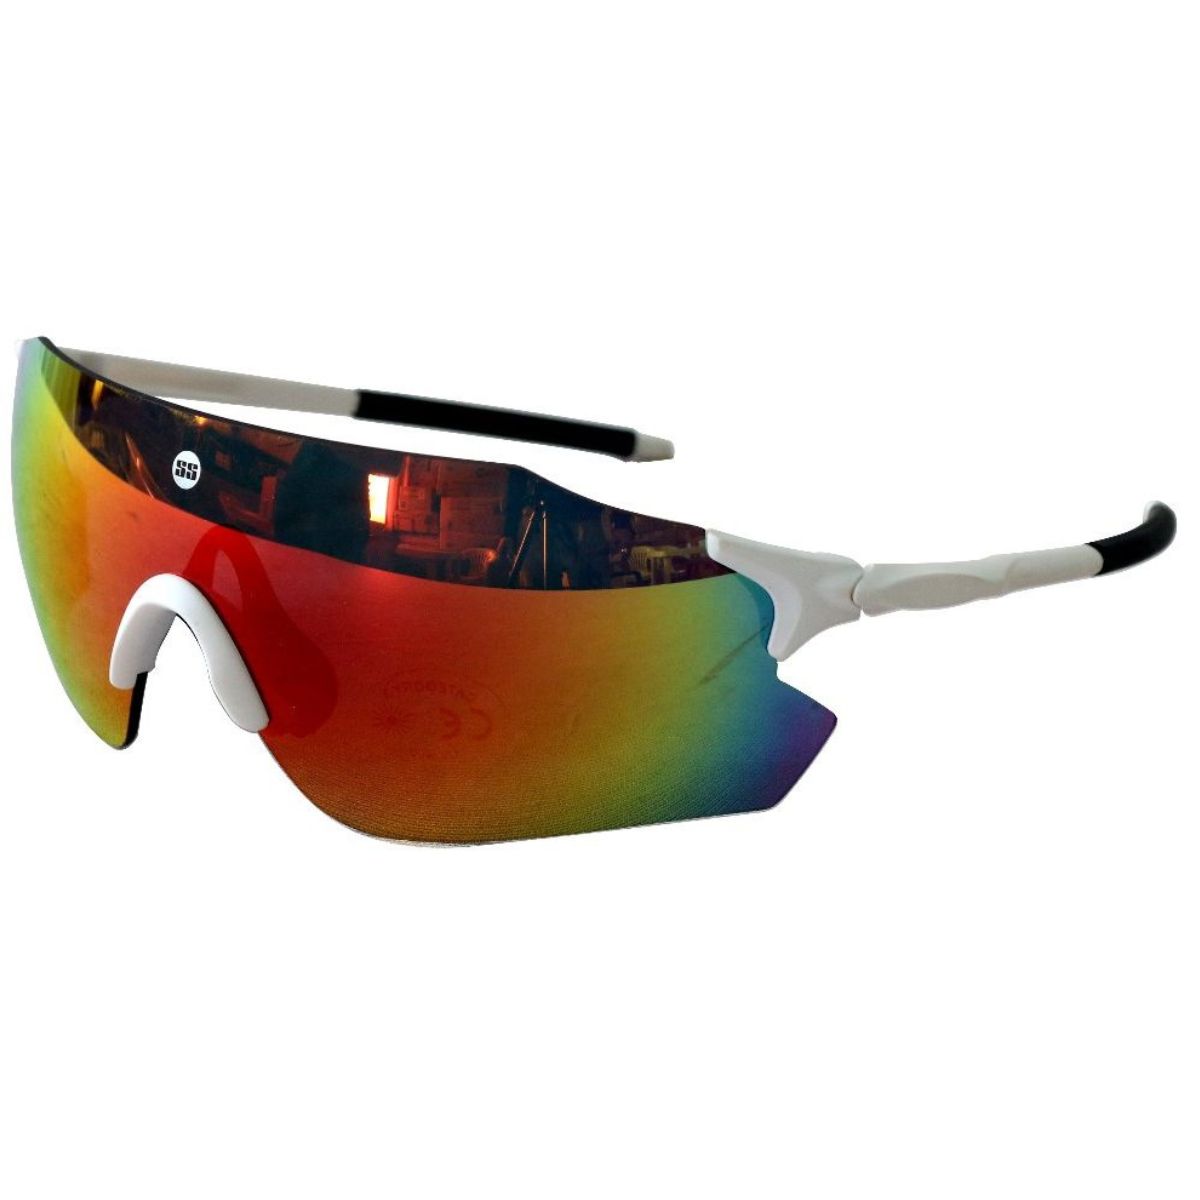 SS Legacy pro 2.0 sports Sunglasses